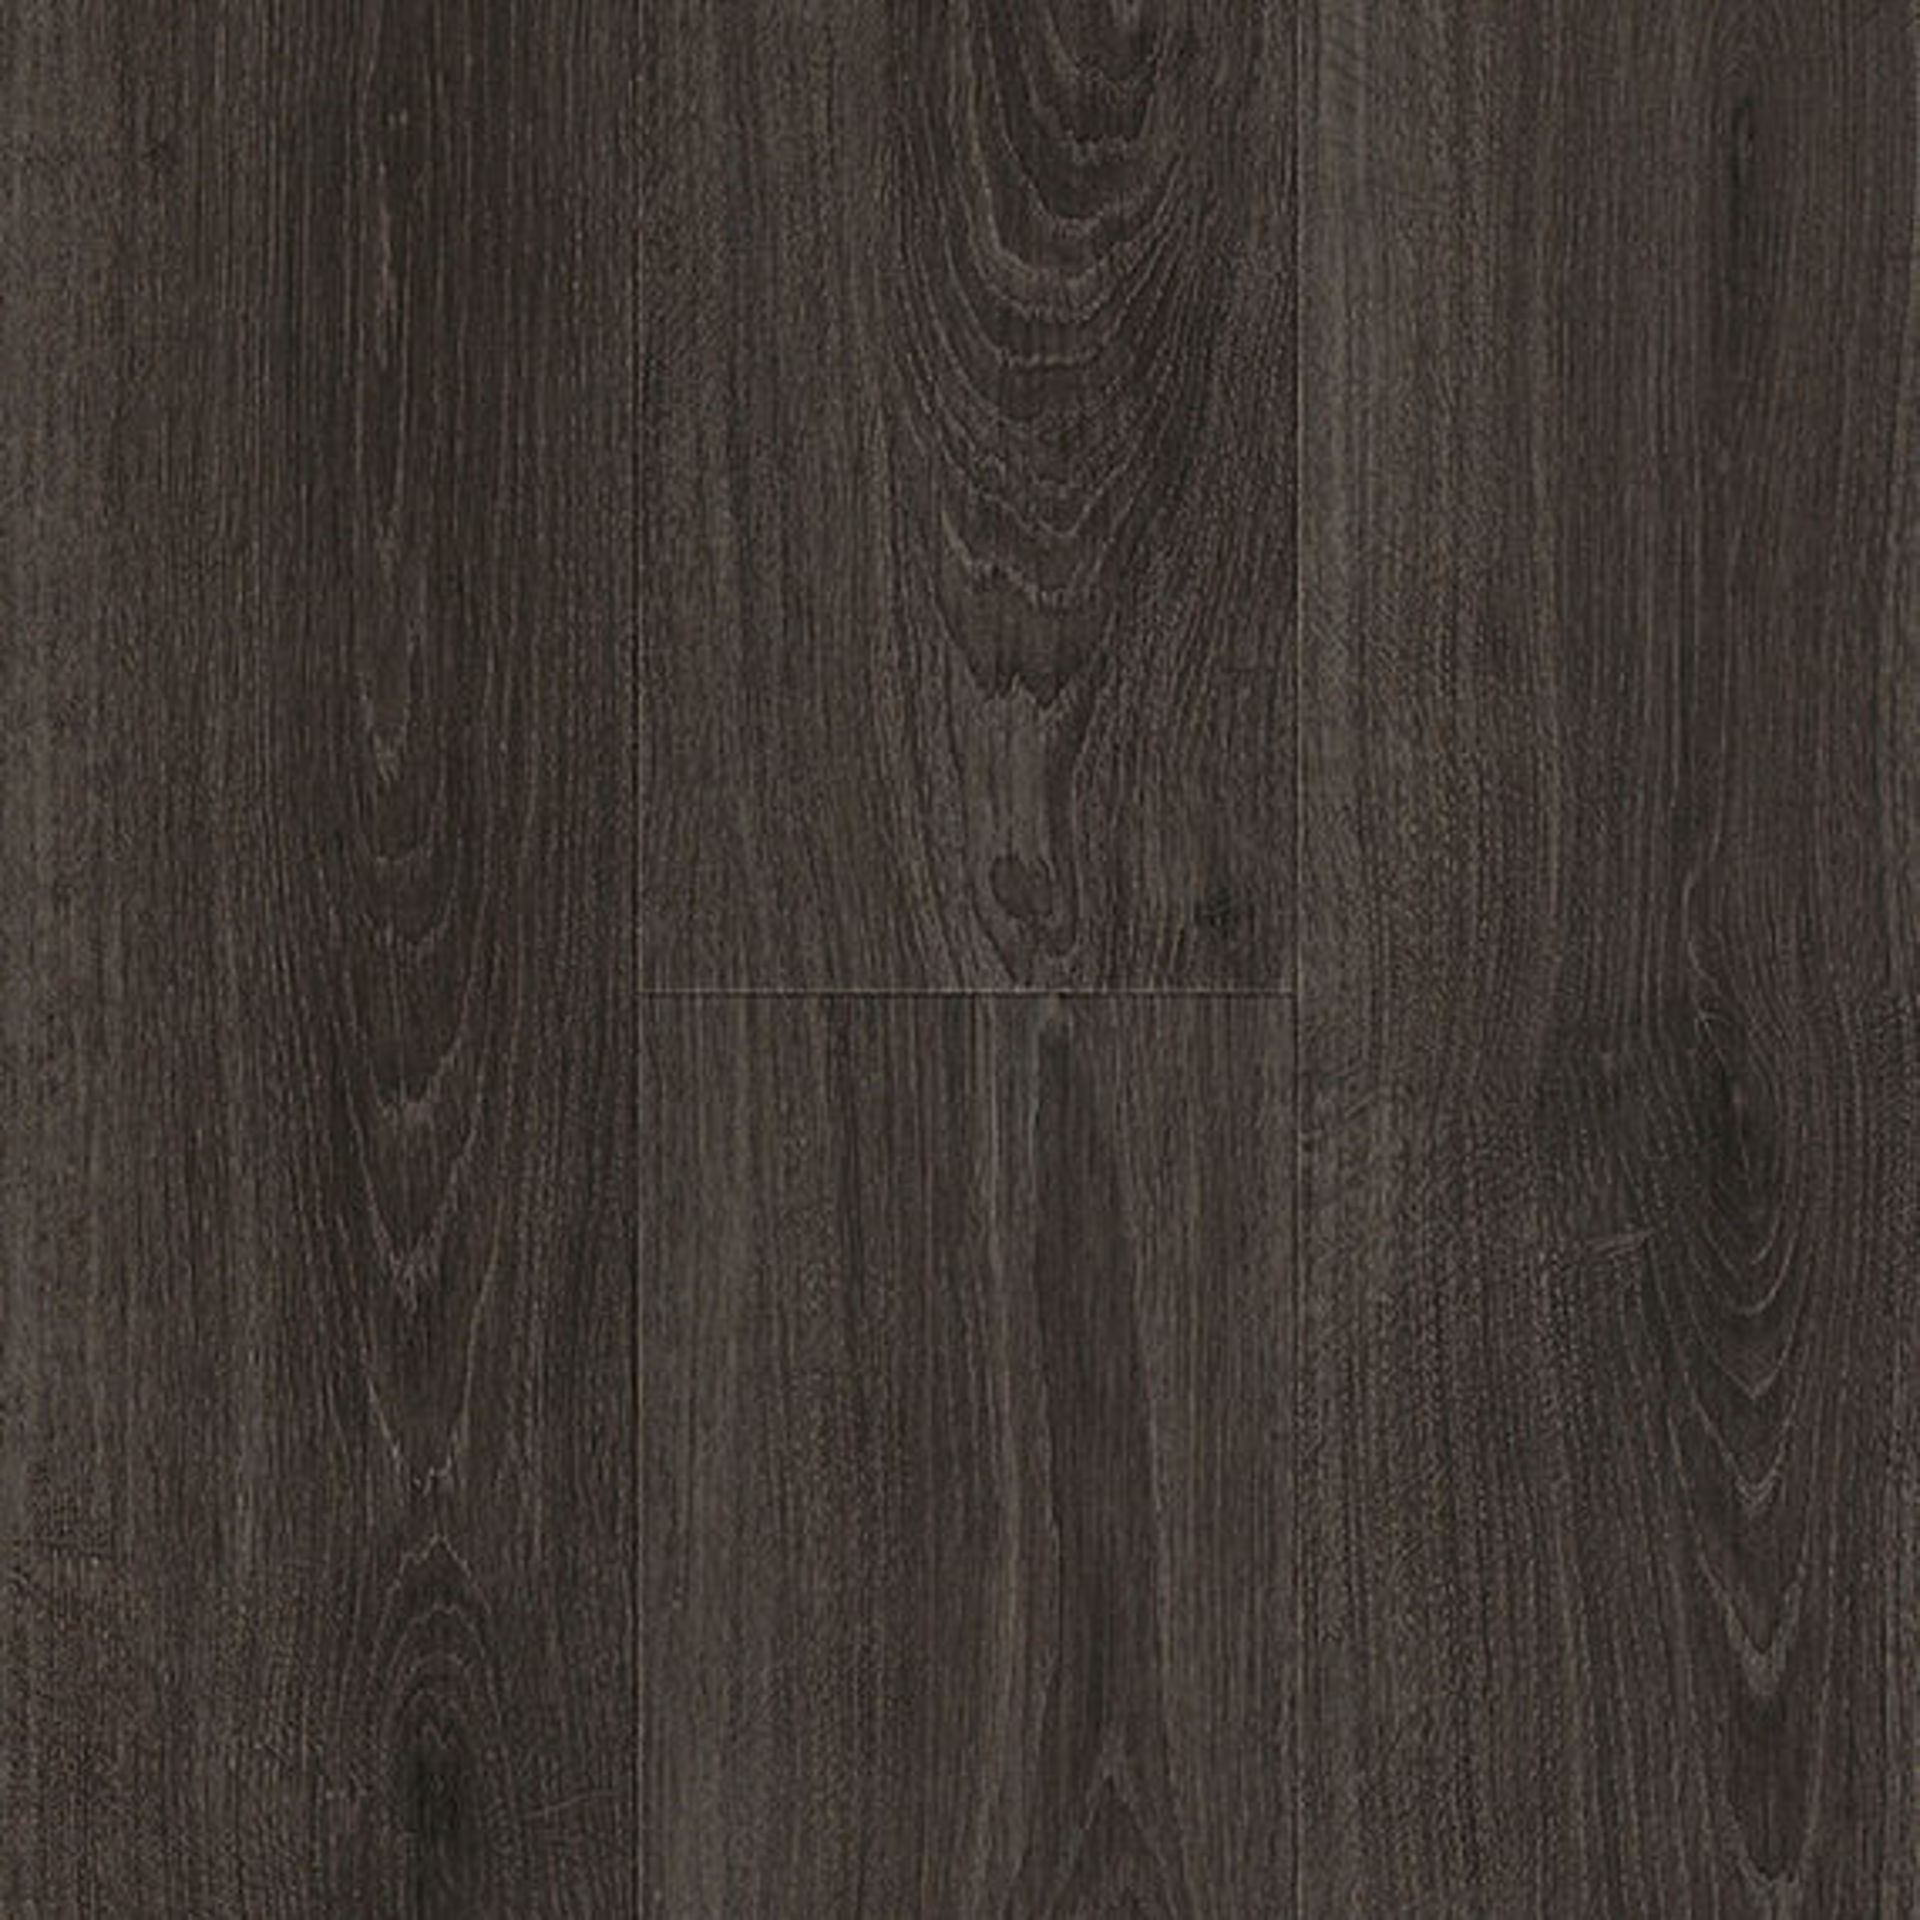 3.2 square metres of Aquastep waterproof laminate flooring in anthrasite oak wood.